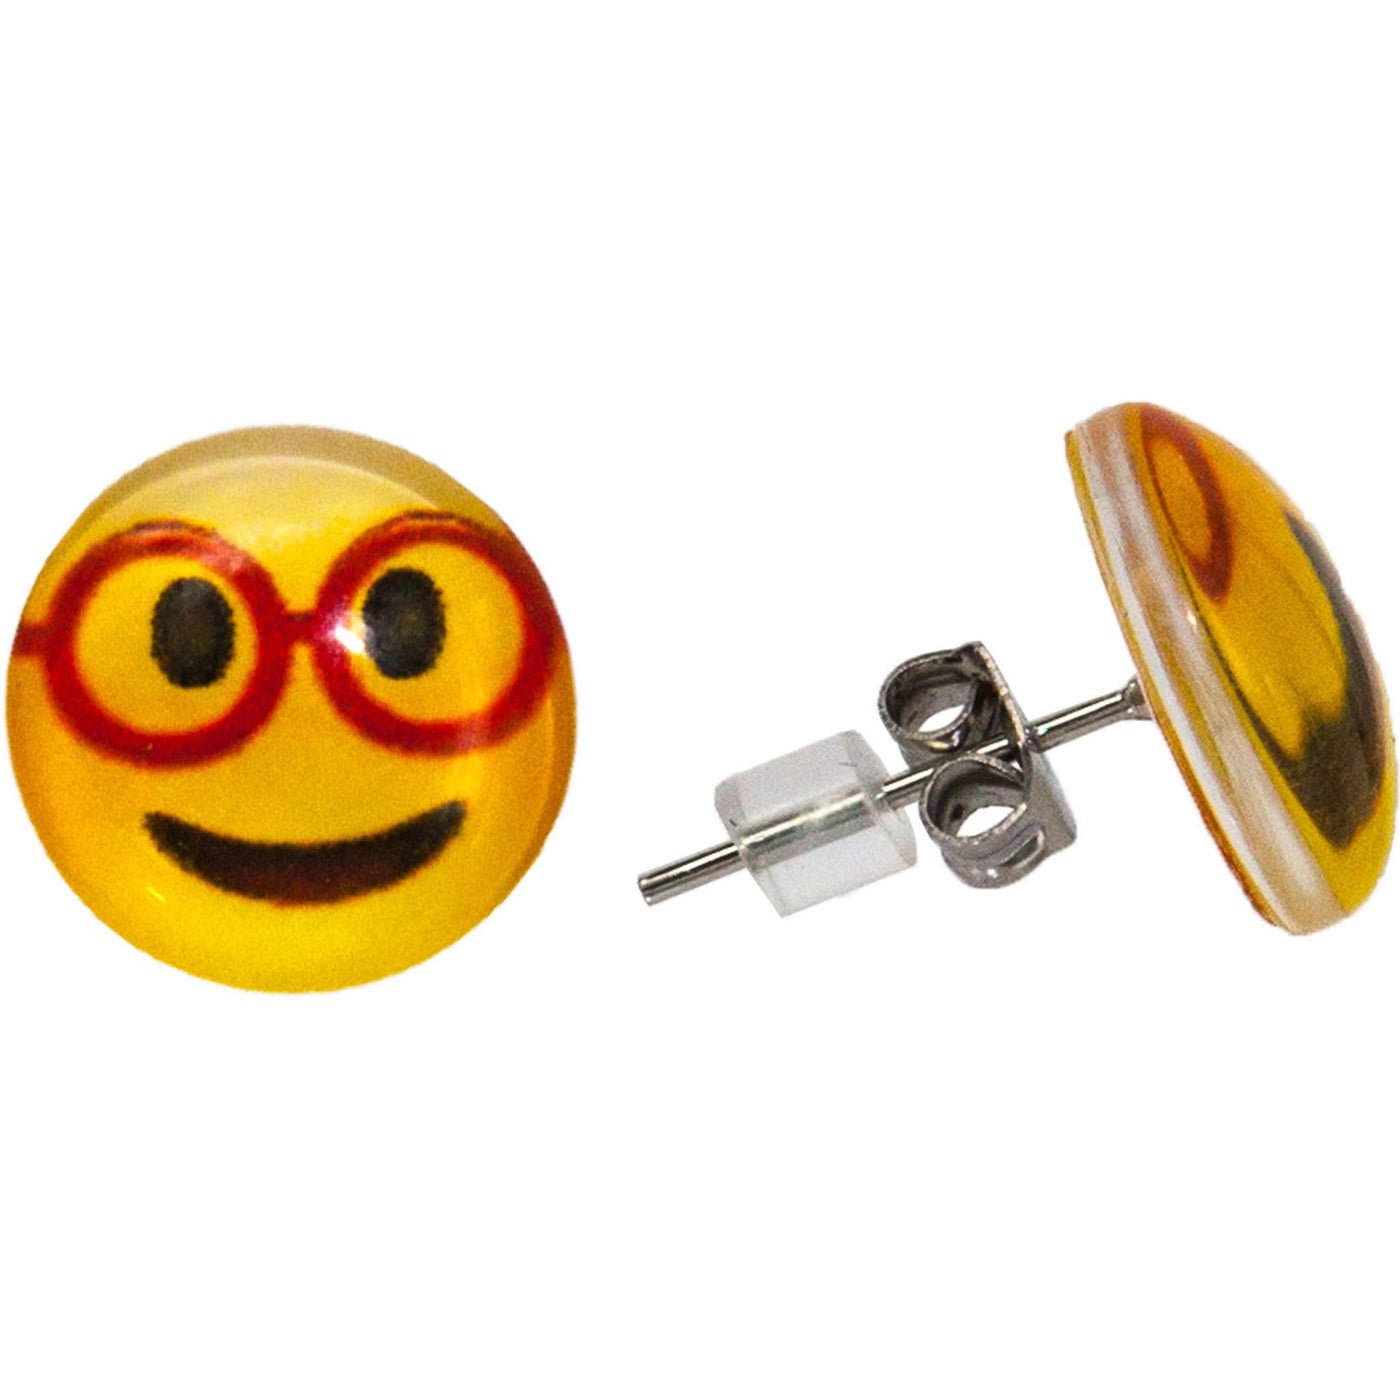 Emoji nerd earrings